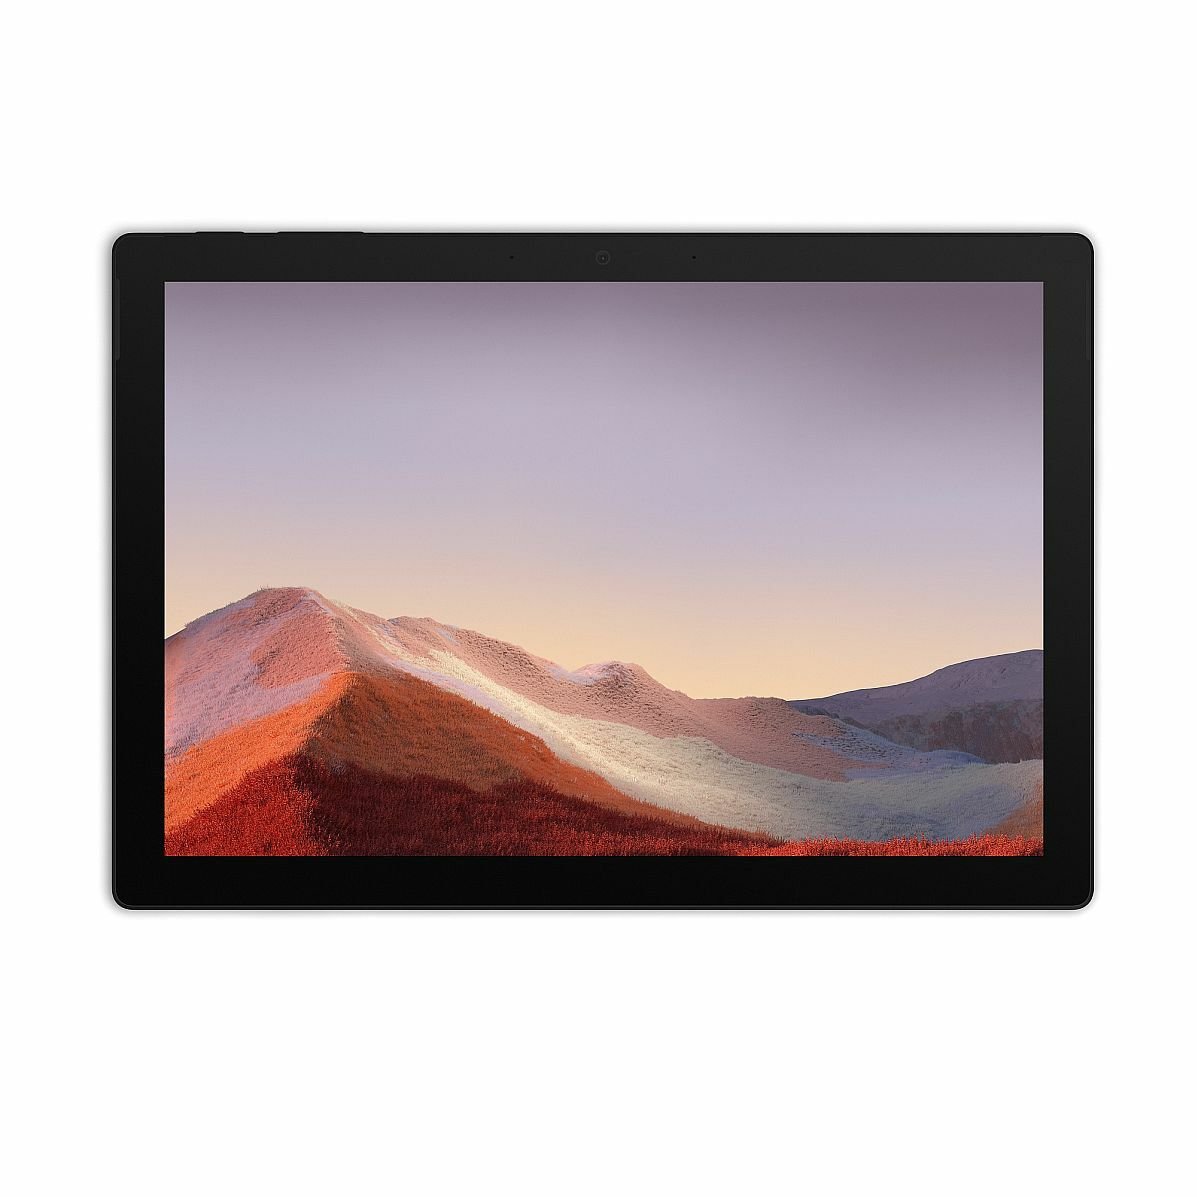 Microsoft Surface Pro 7 i5 8GB 256GB 2-in-1 Laptop - Black